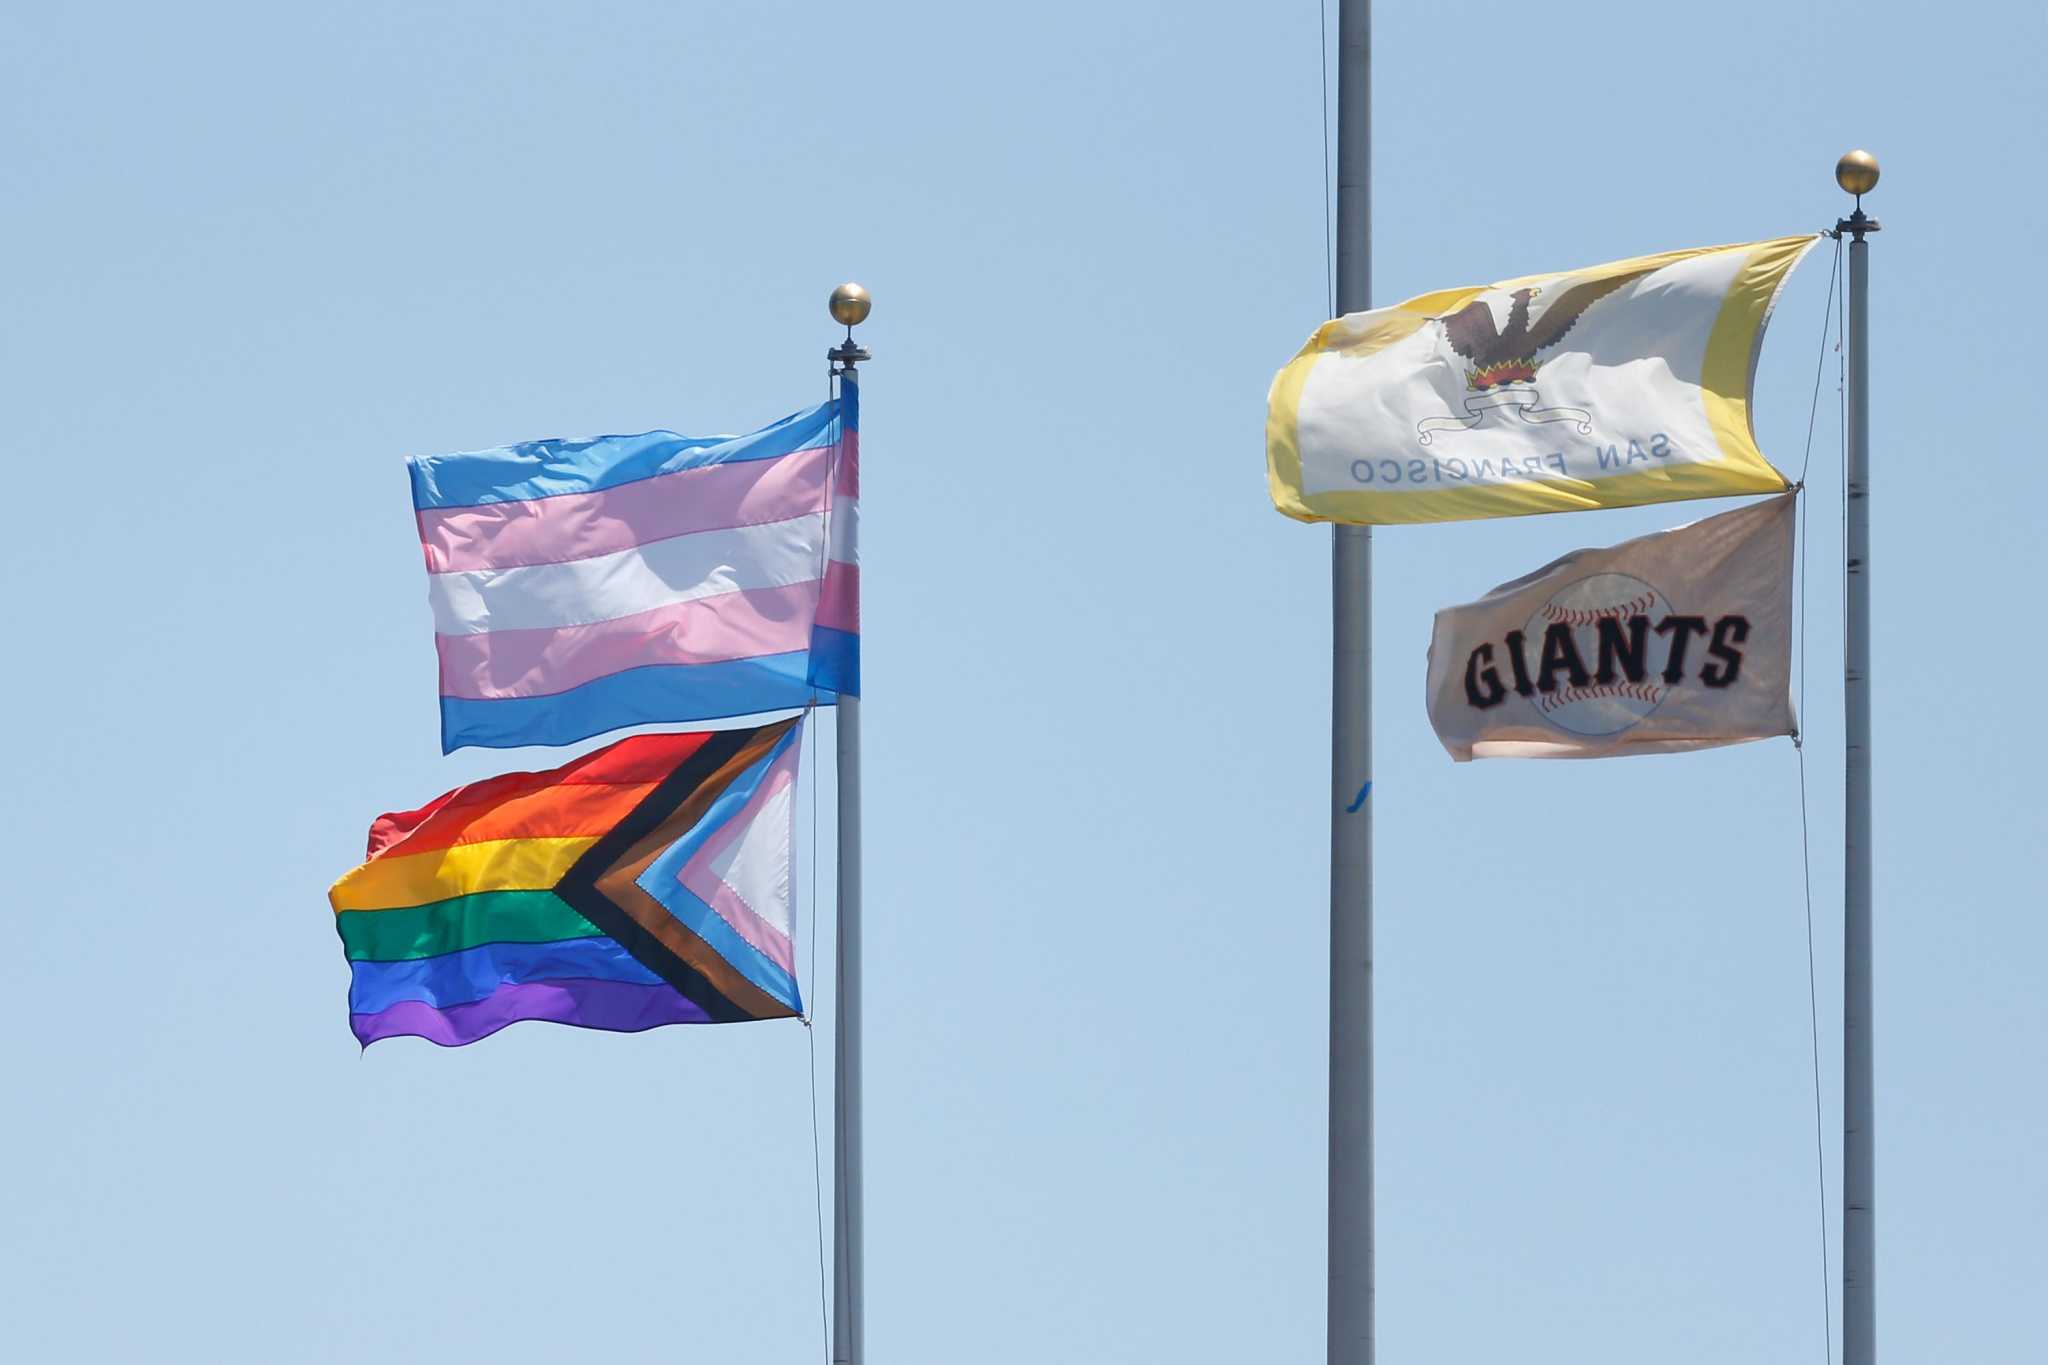 Baseball's Spirit Day celebration great for LGBTQ fans, but not yet  universal